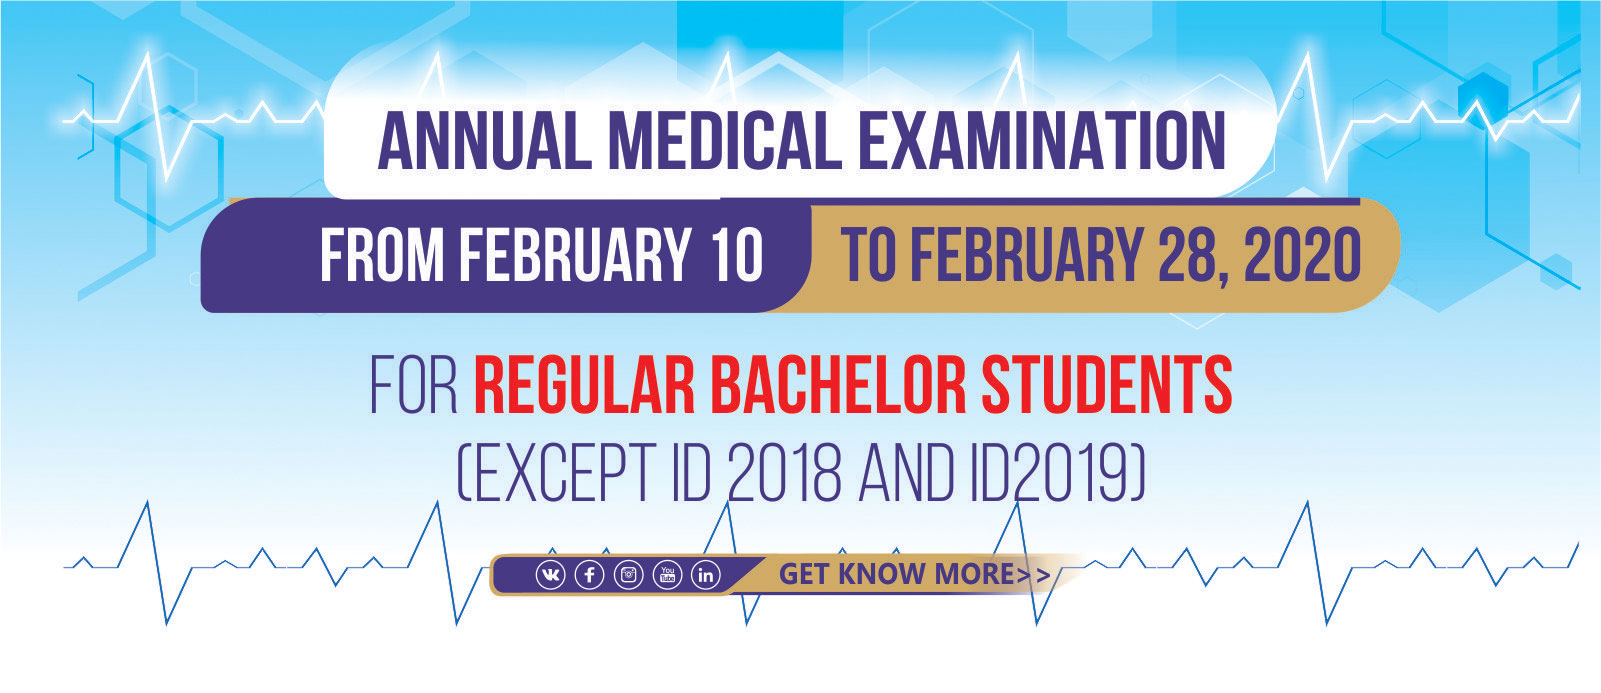 Medical Examination - February 10, 28